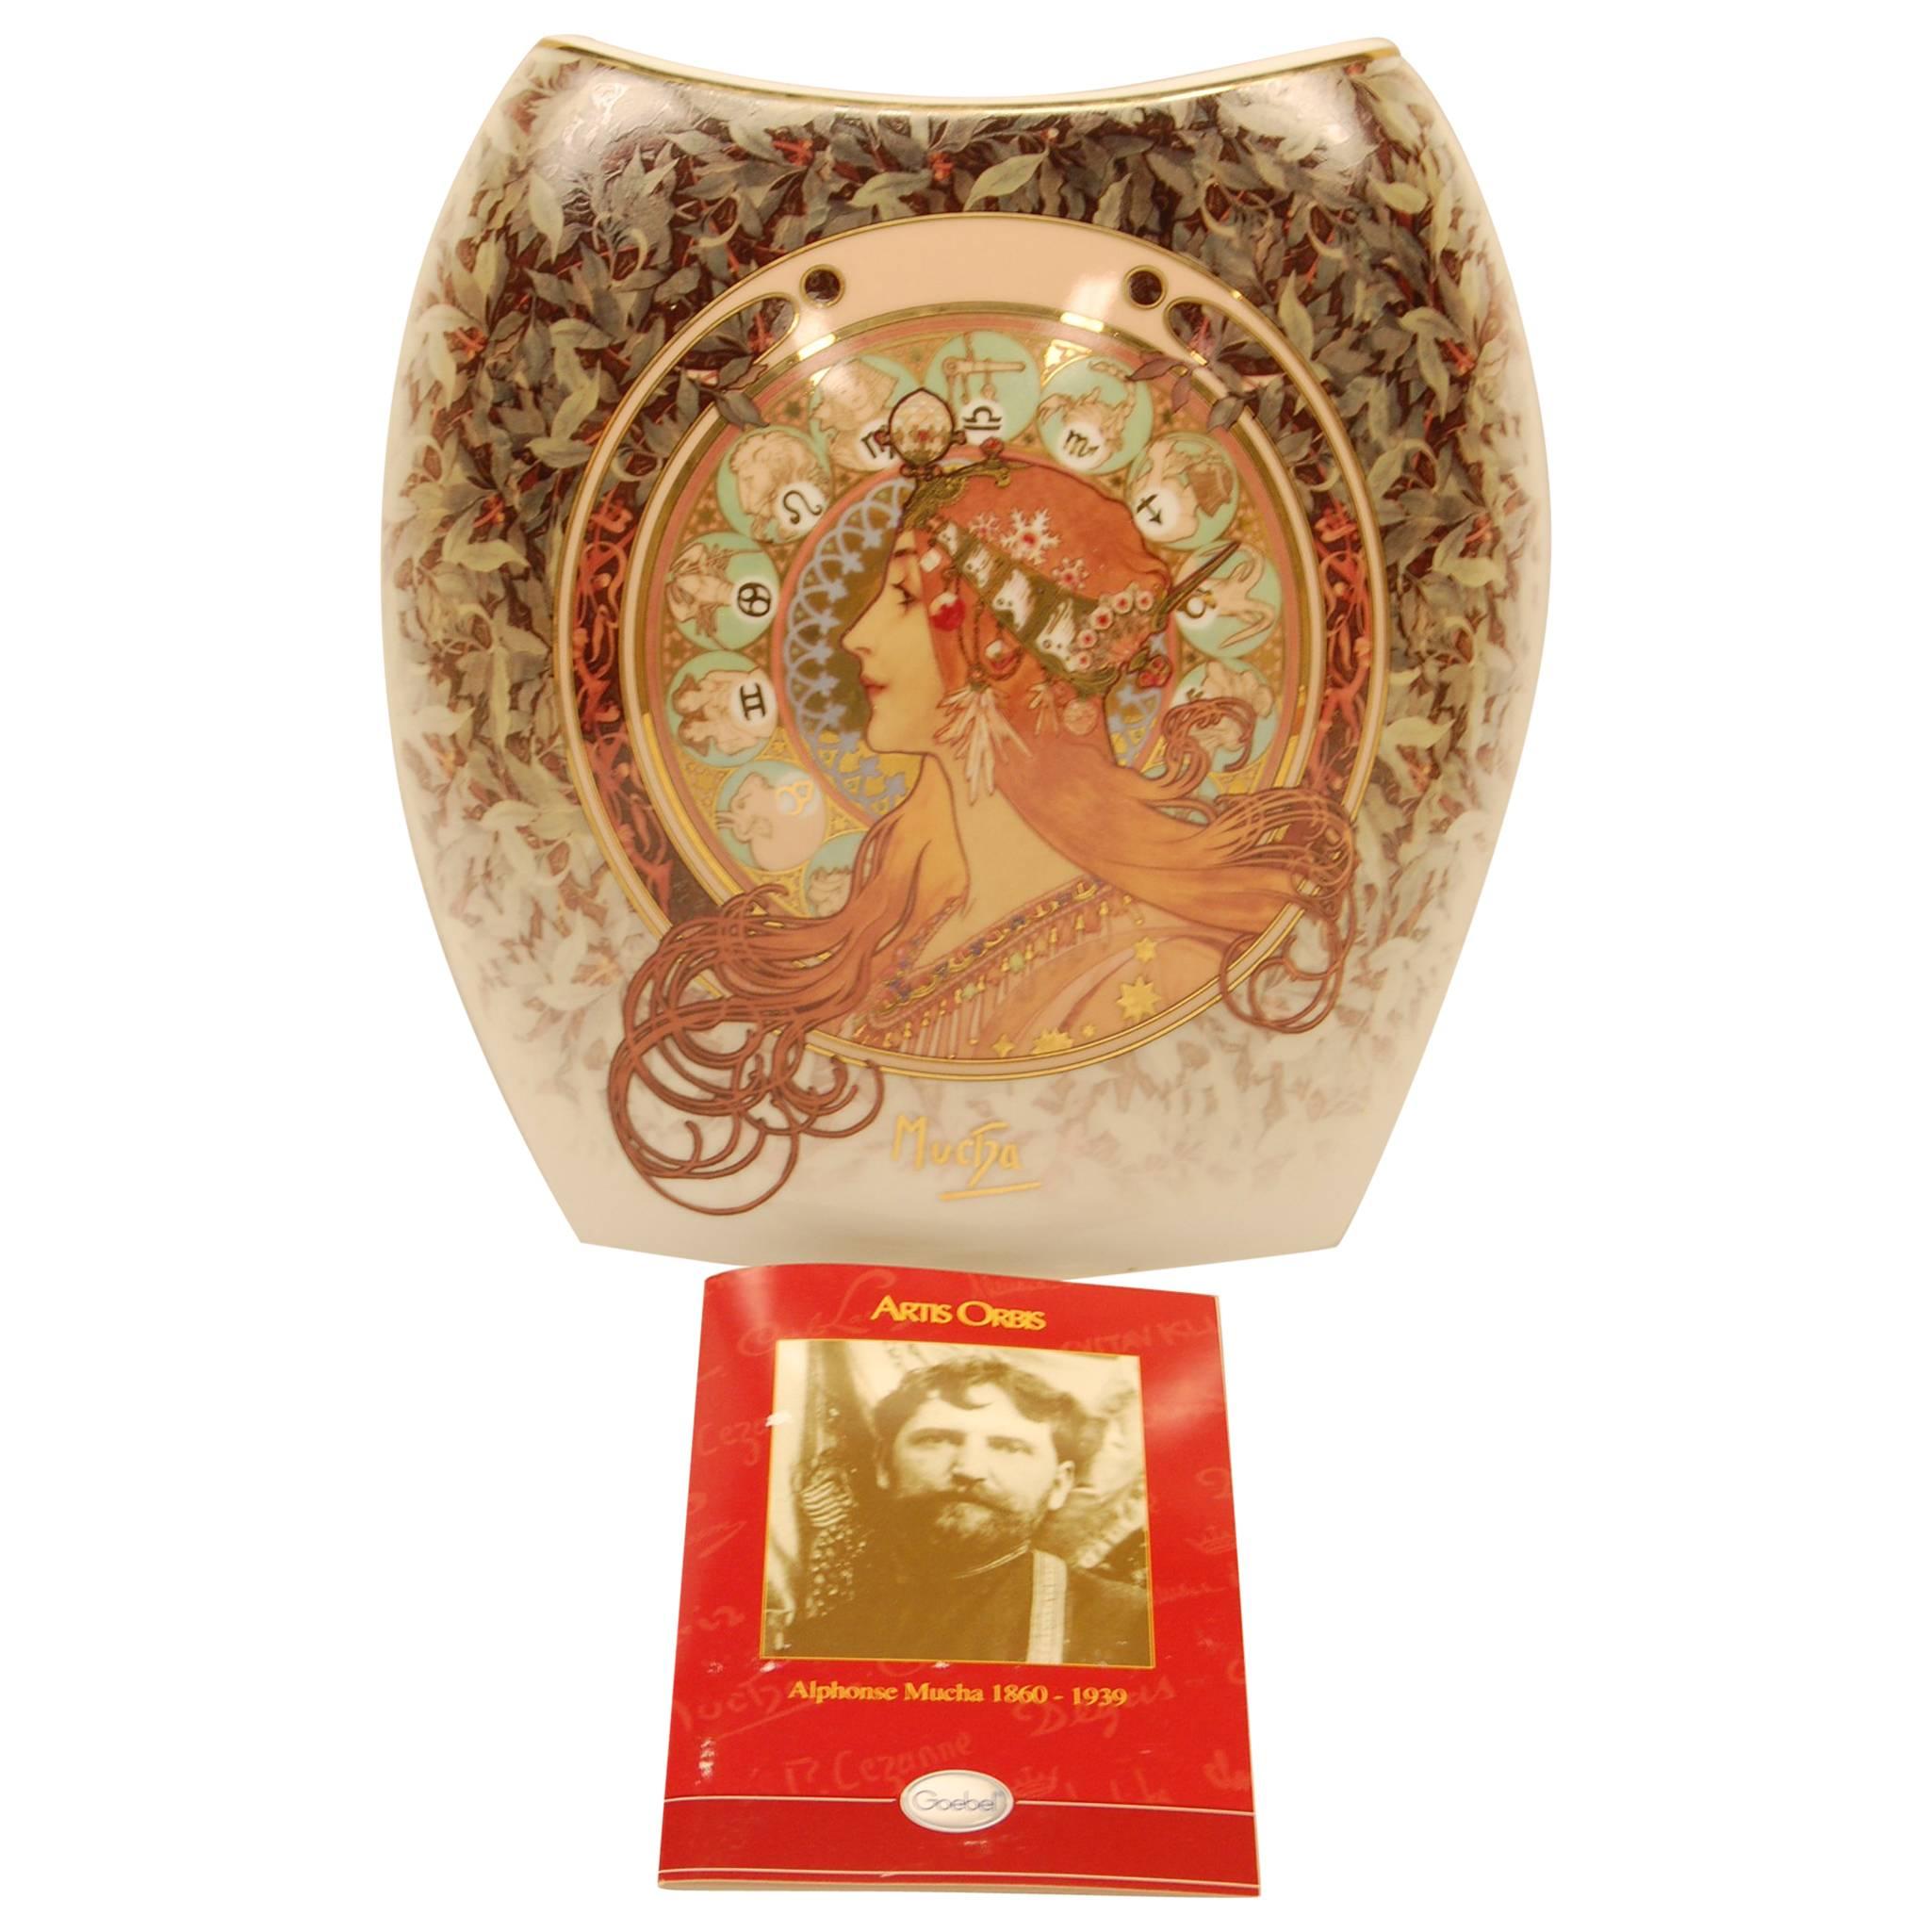 5 Porcelain Vases by Goebel, 2004 Artis Orbis "Zodiac Design" from 1896, Rare For Sale